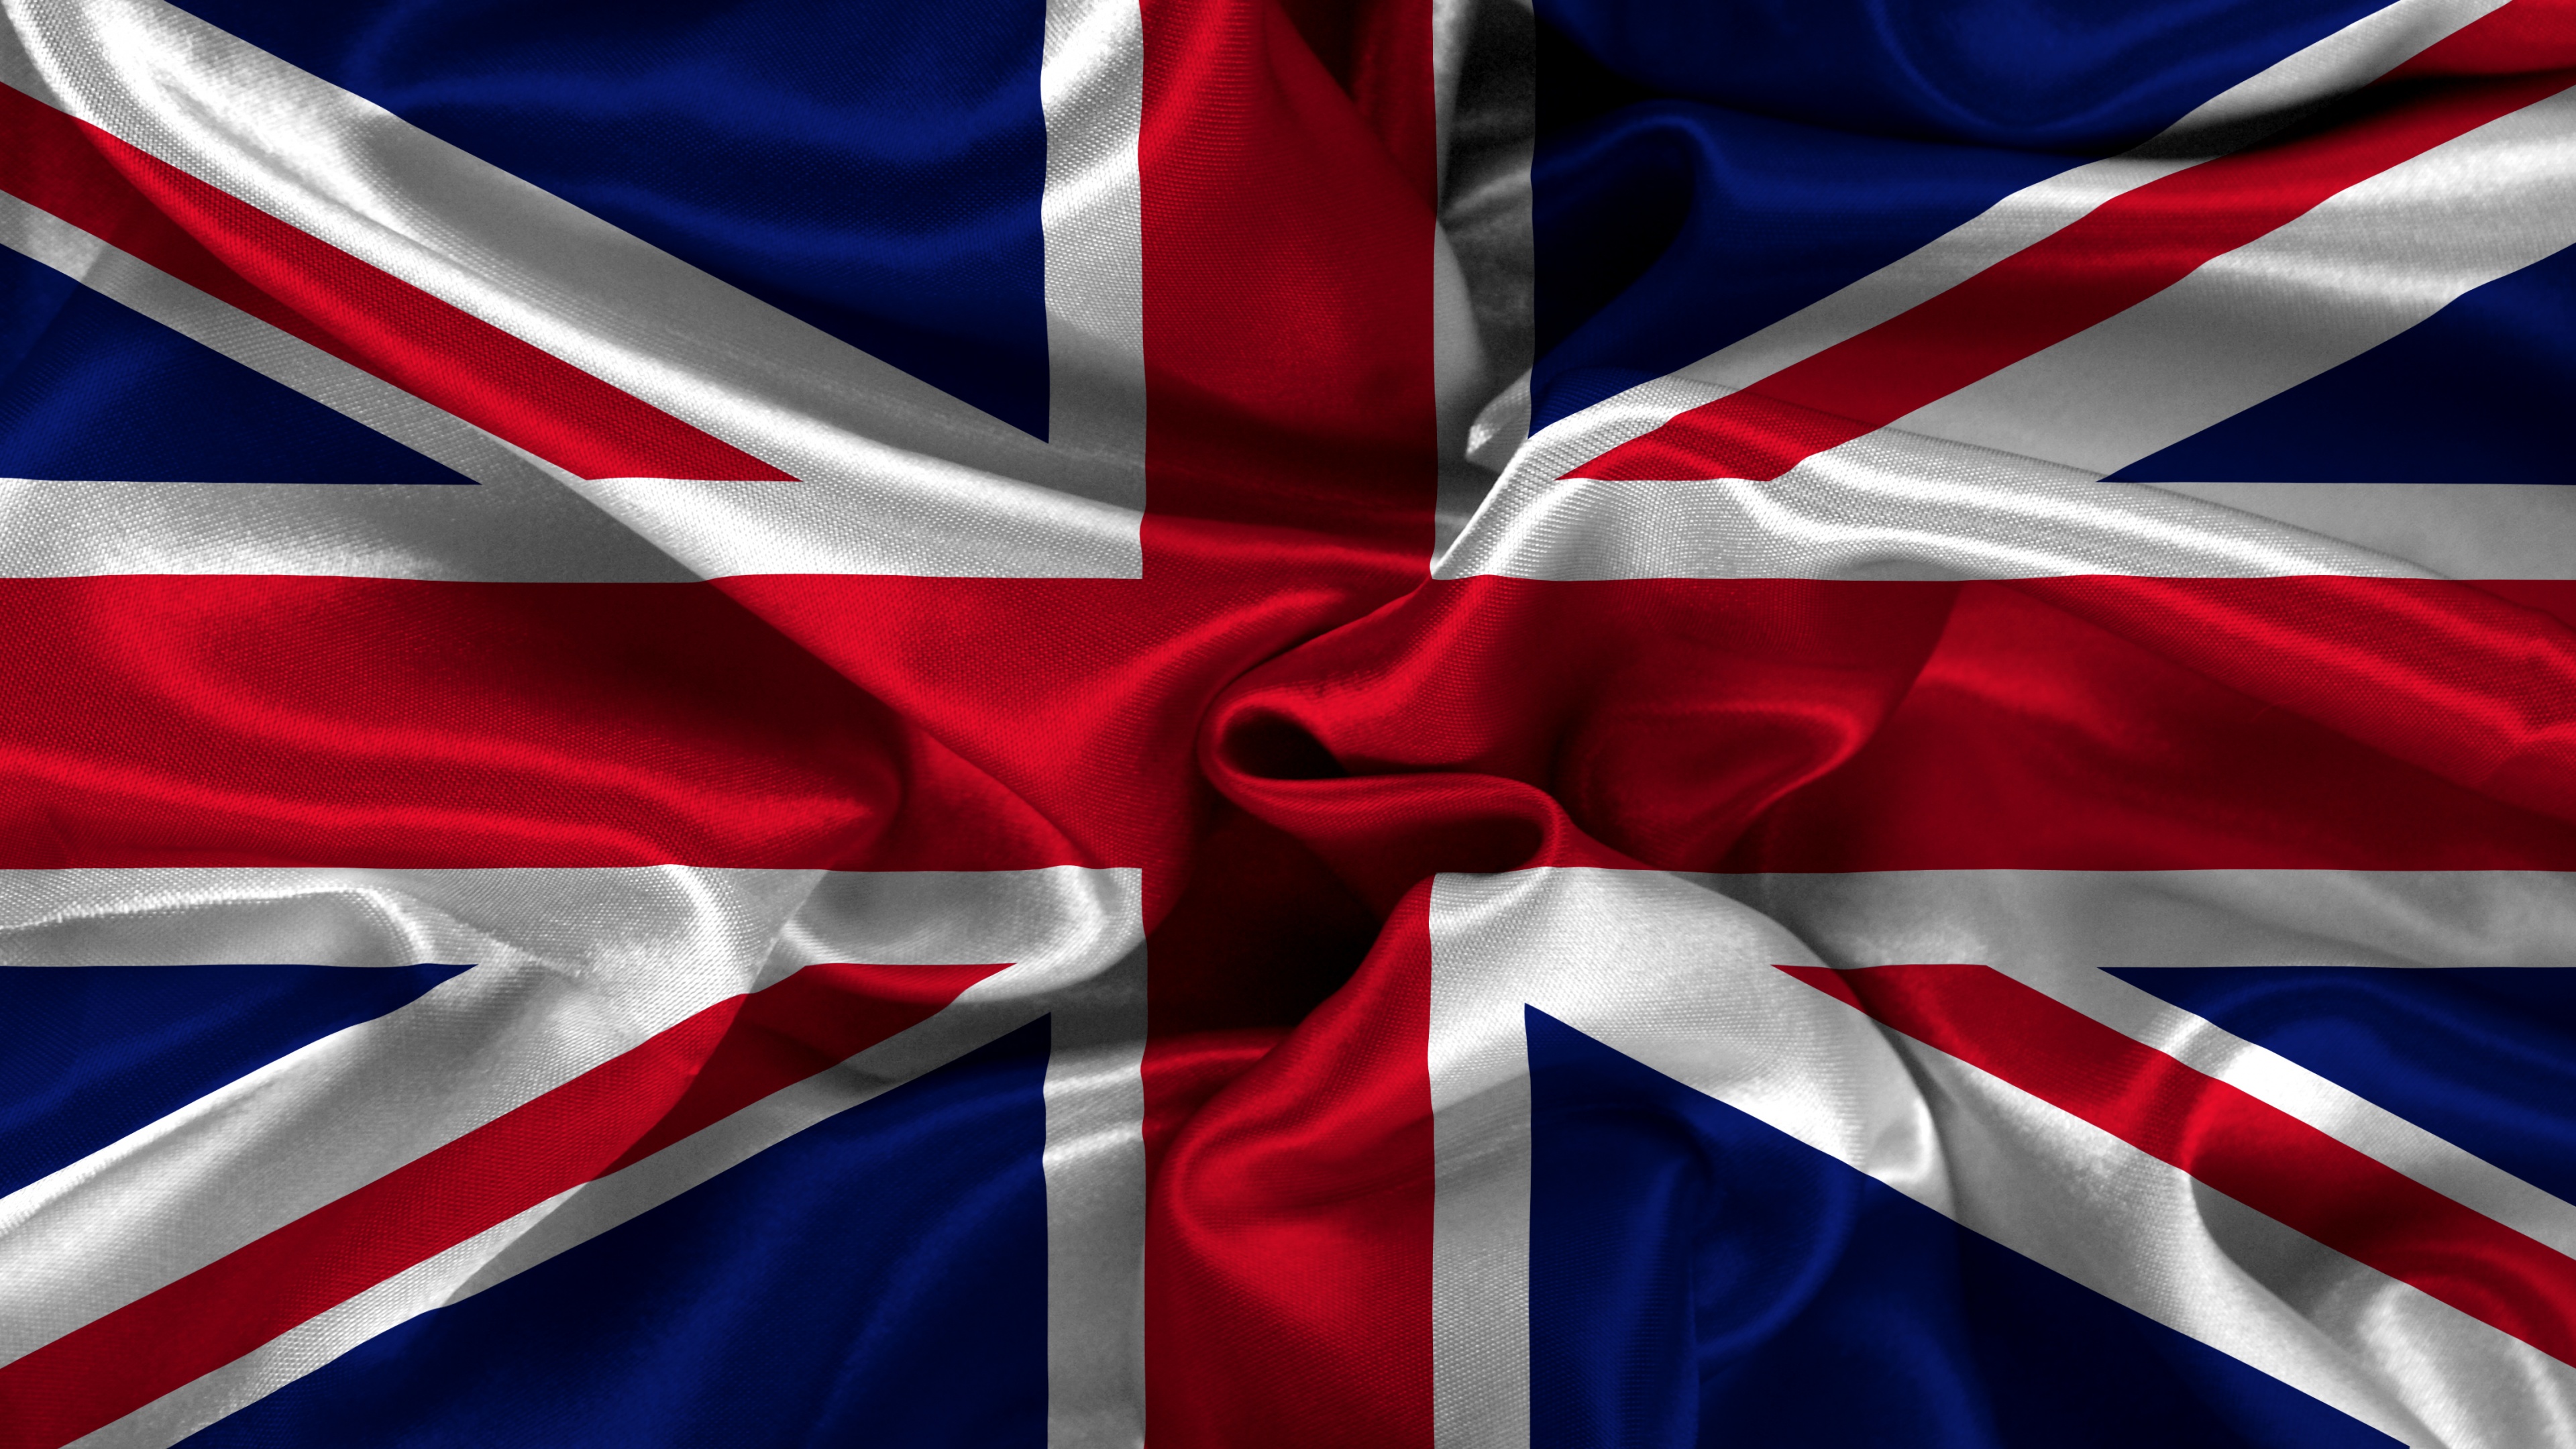 United Kingdom Flag Images  Free Download on Freepik